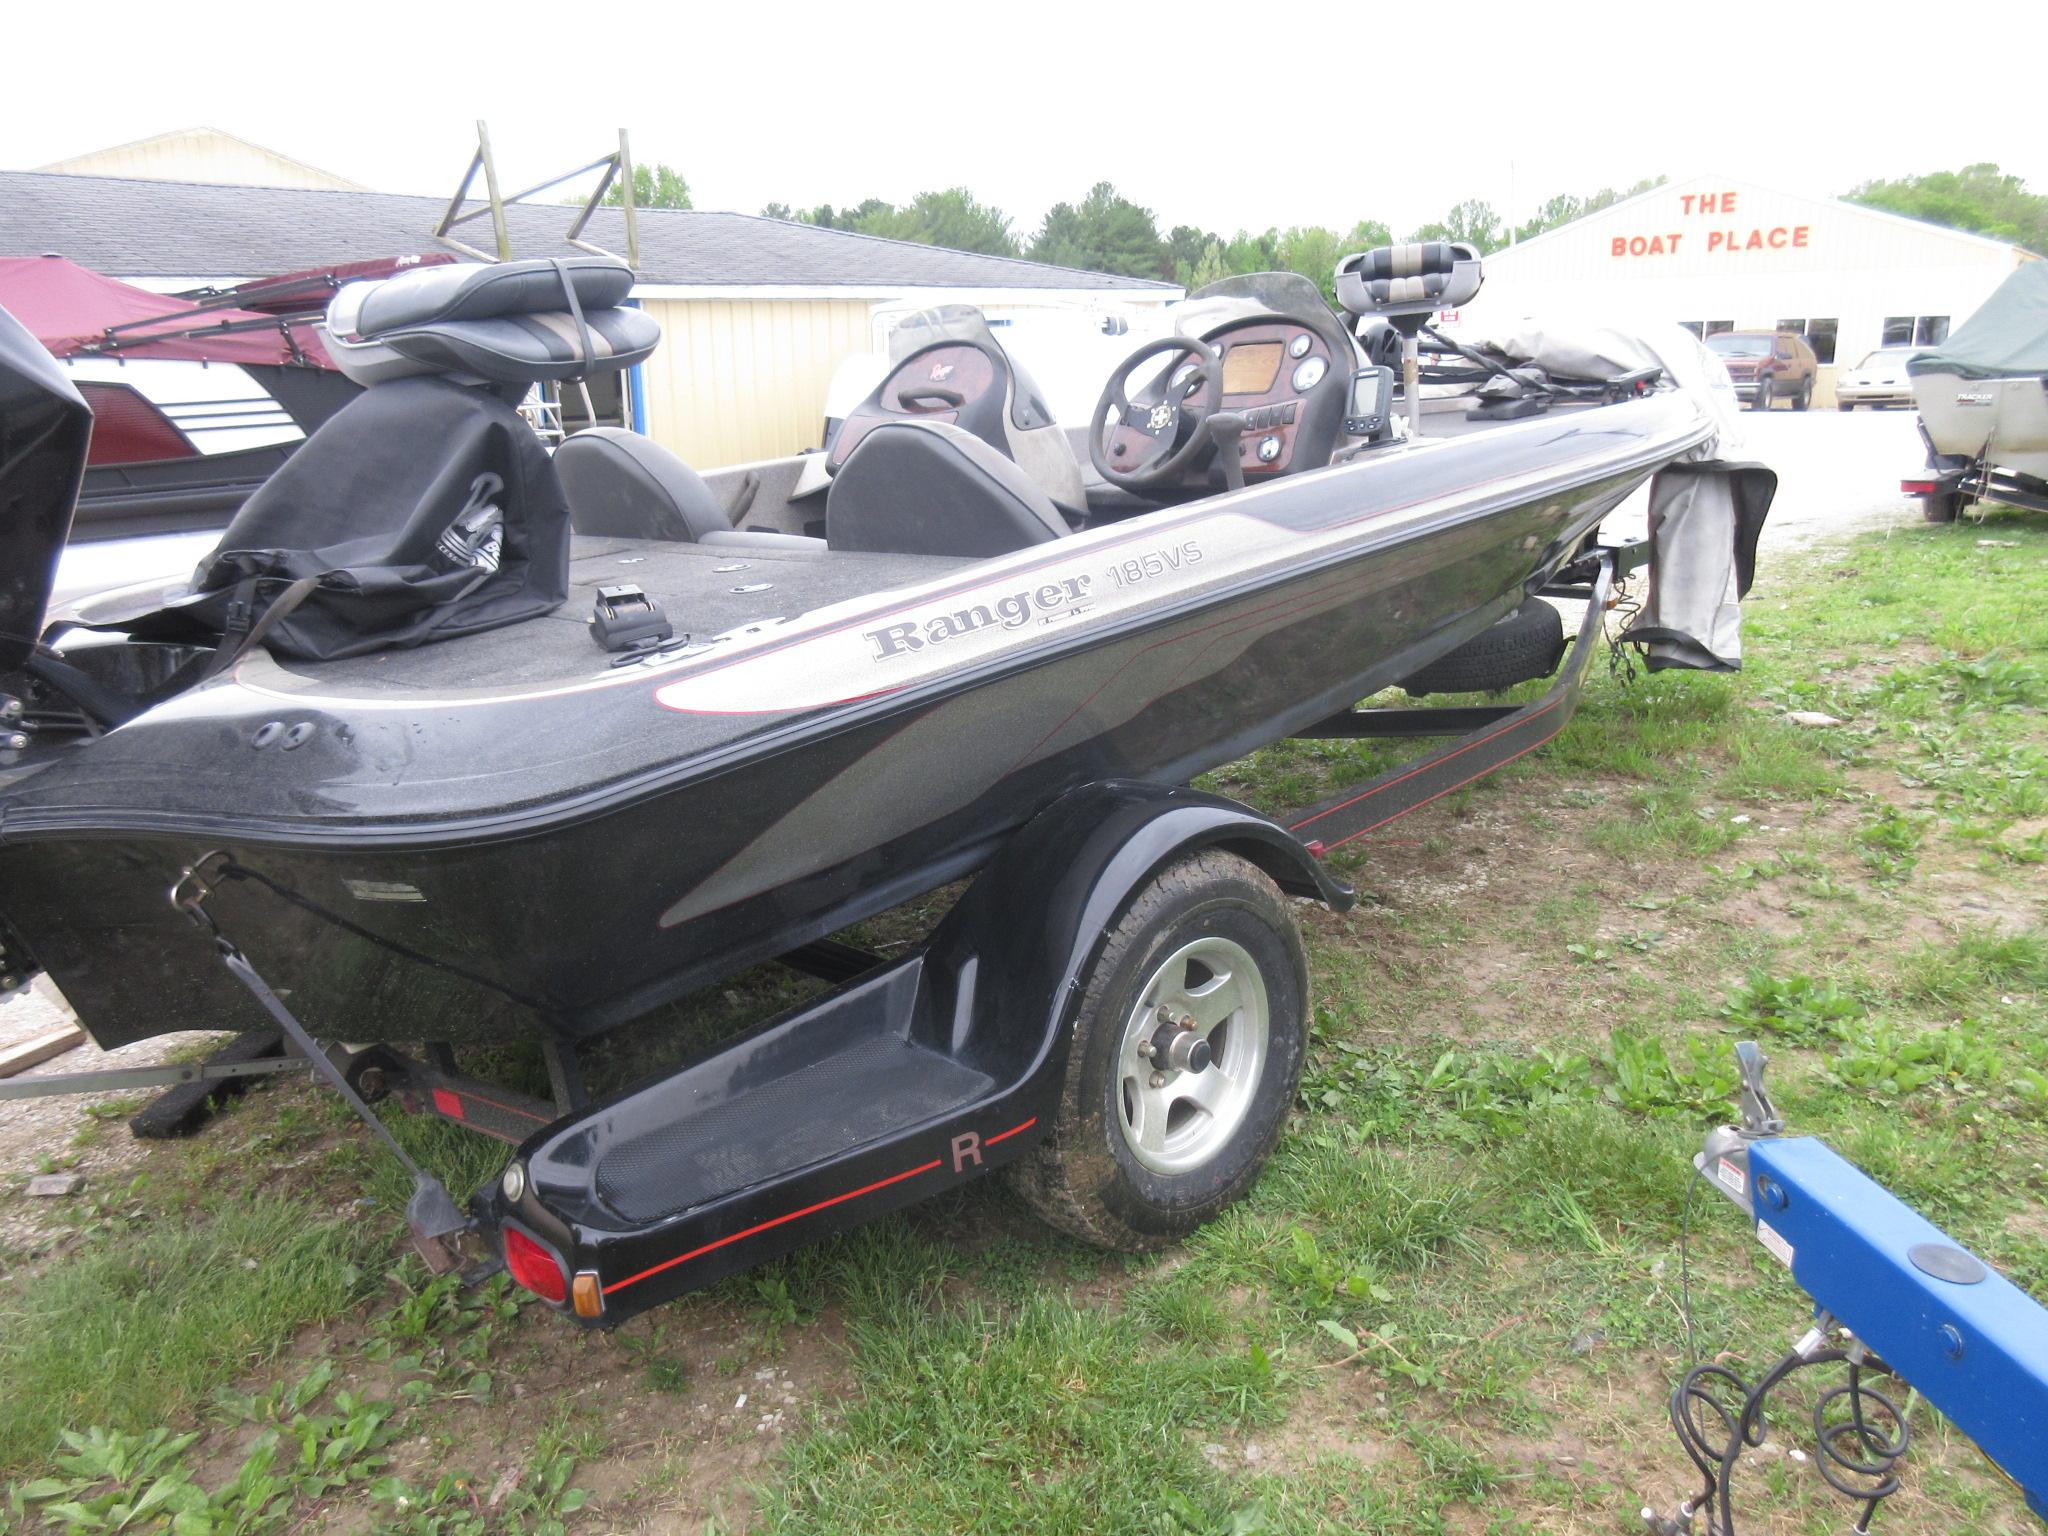 2002 Ranger 185 VS, Rockville Indiana - boats.com